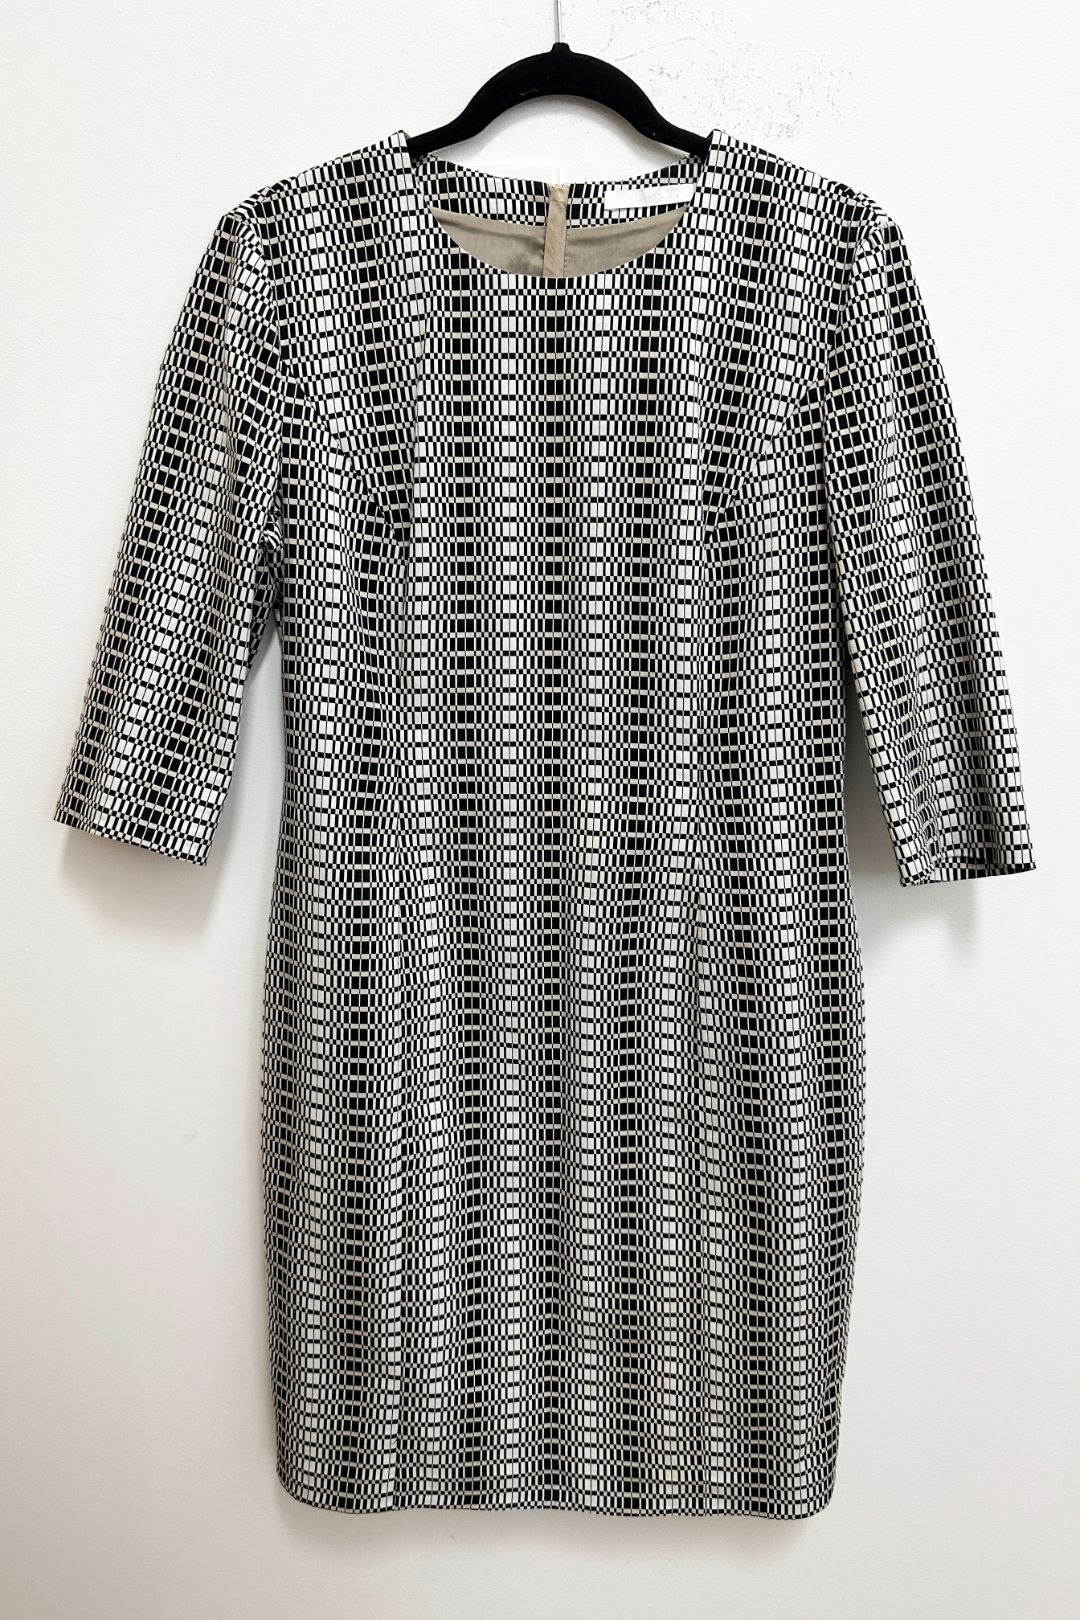 Hugo Boss - Geometric Print Dress in Multi